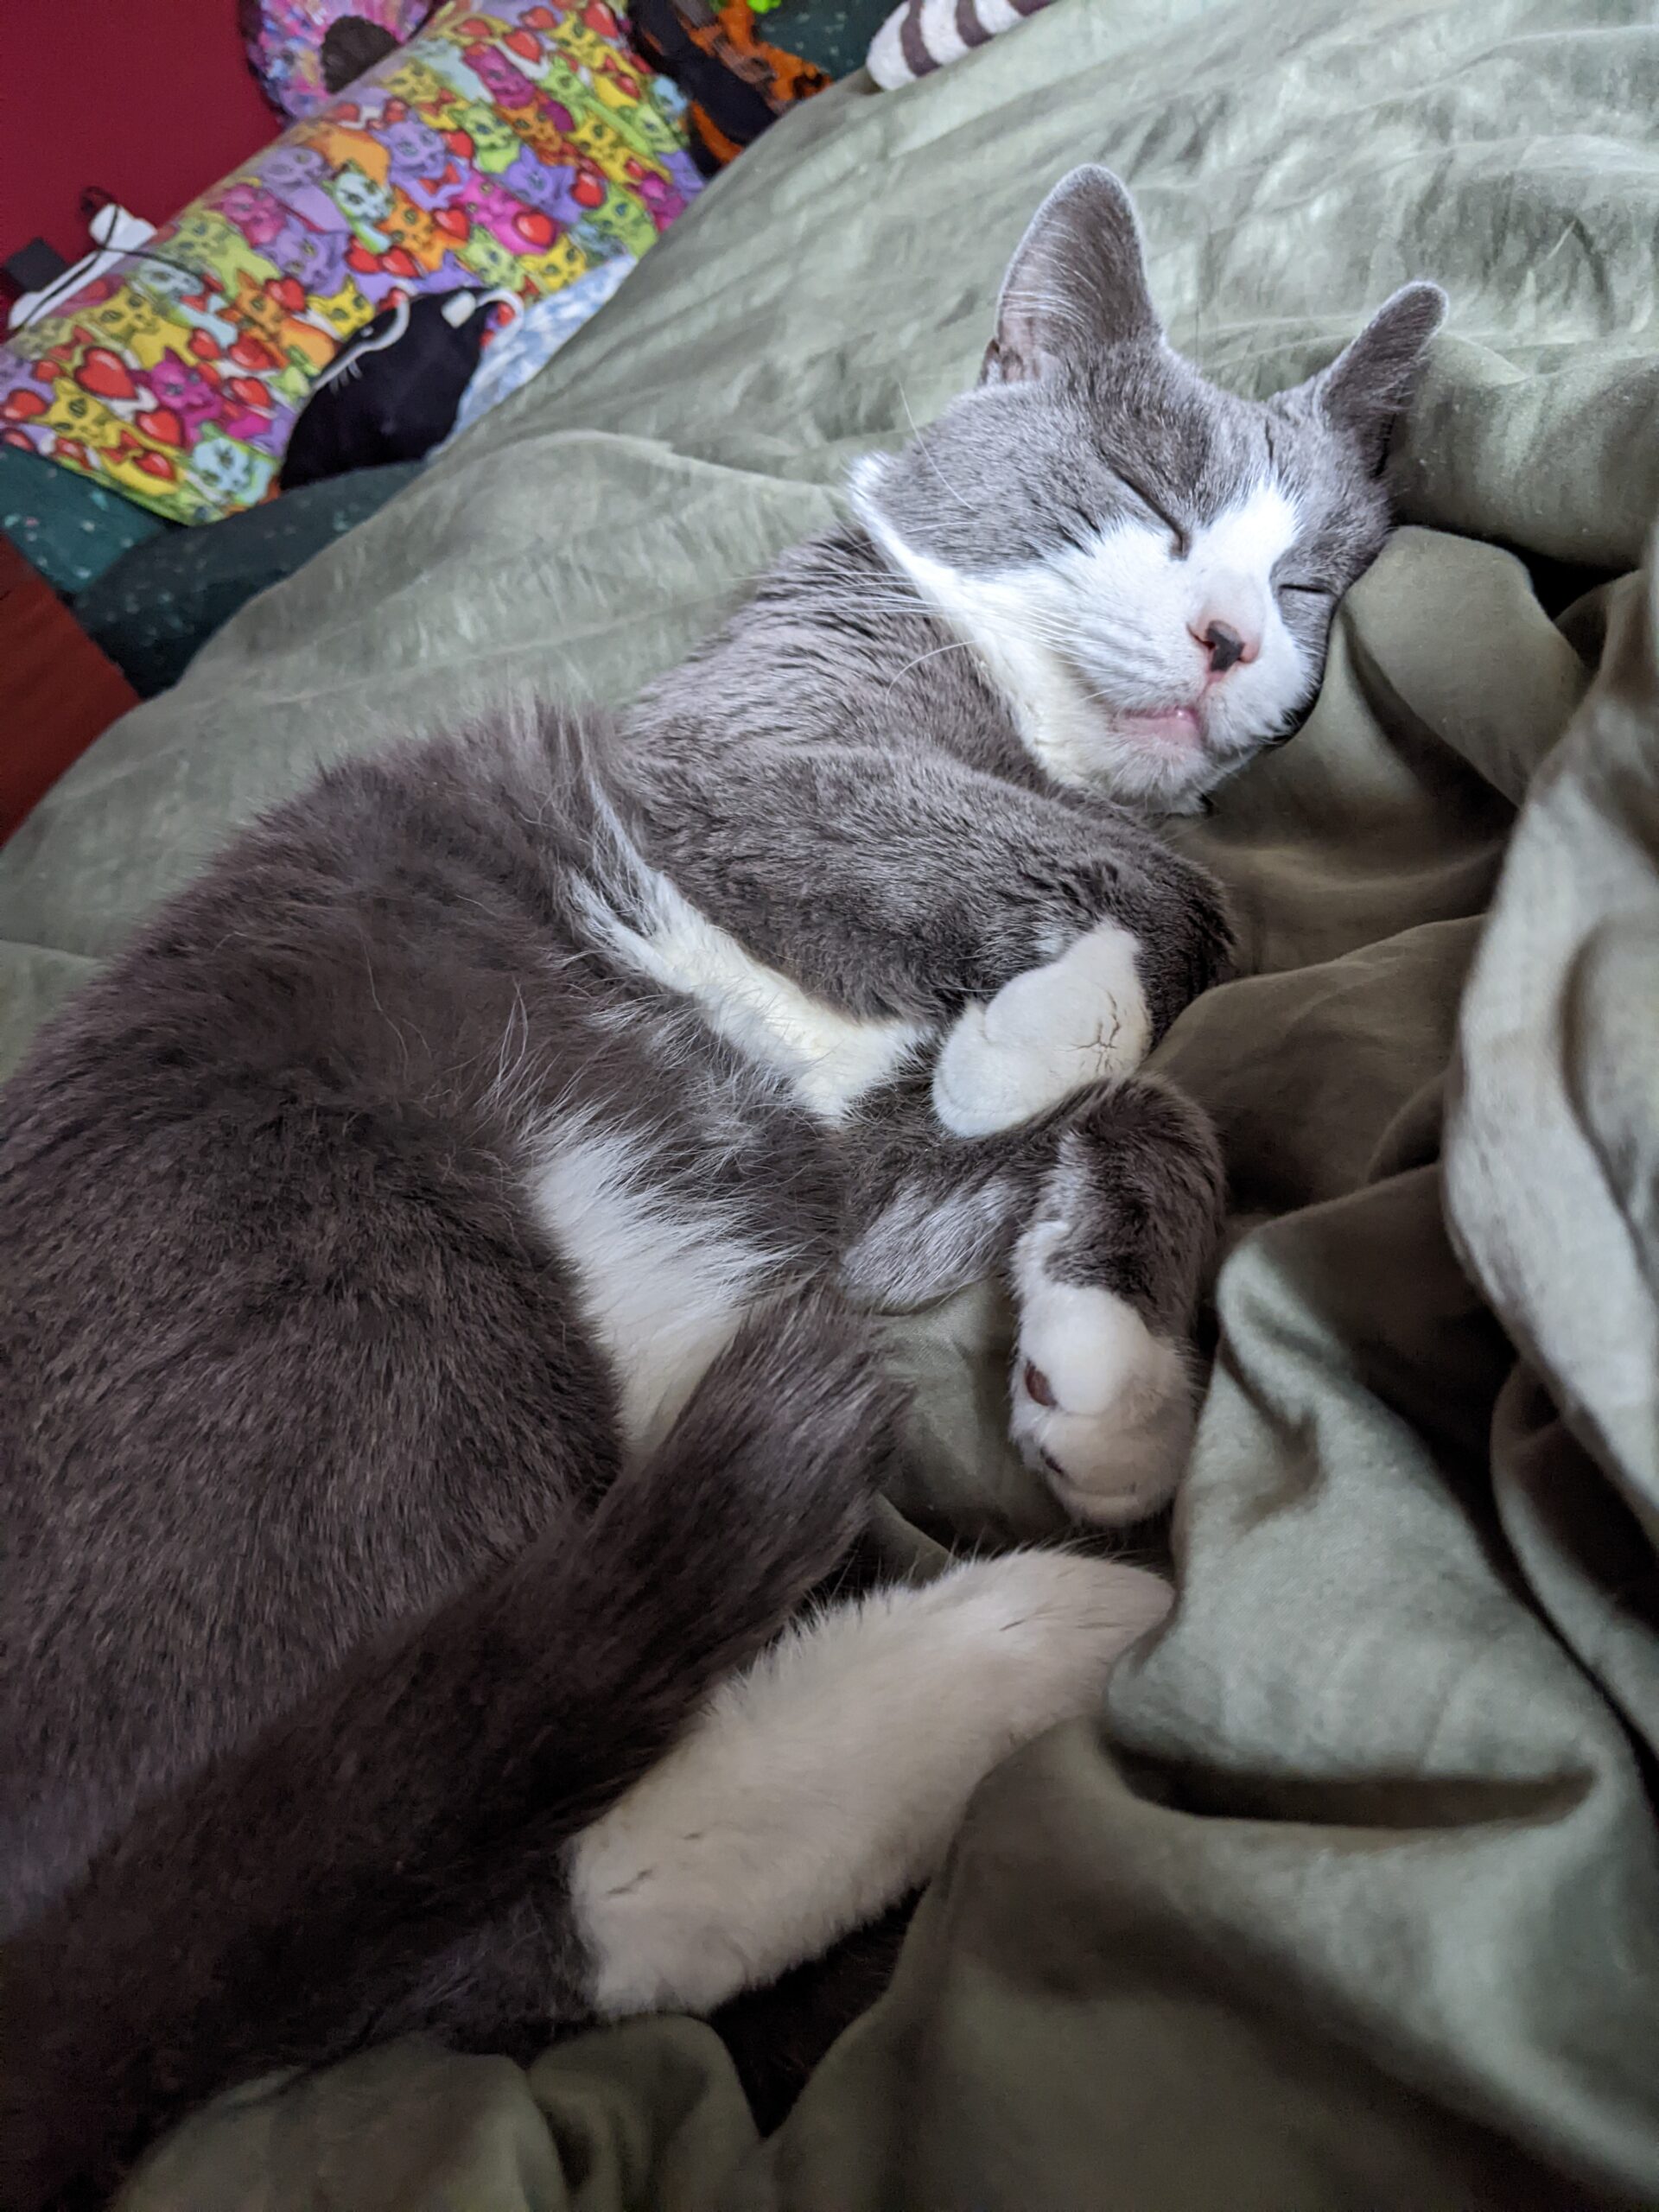 photo of sleeping cat